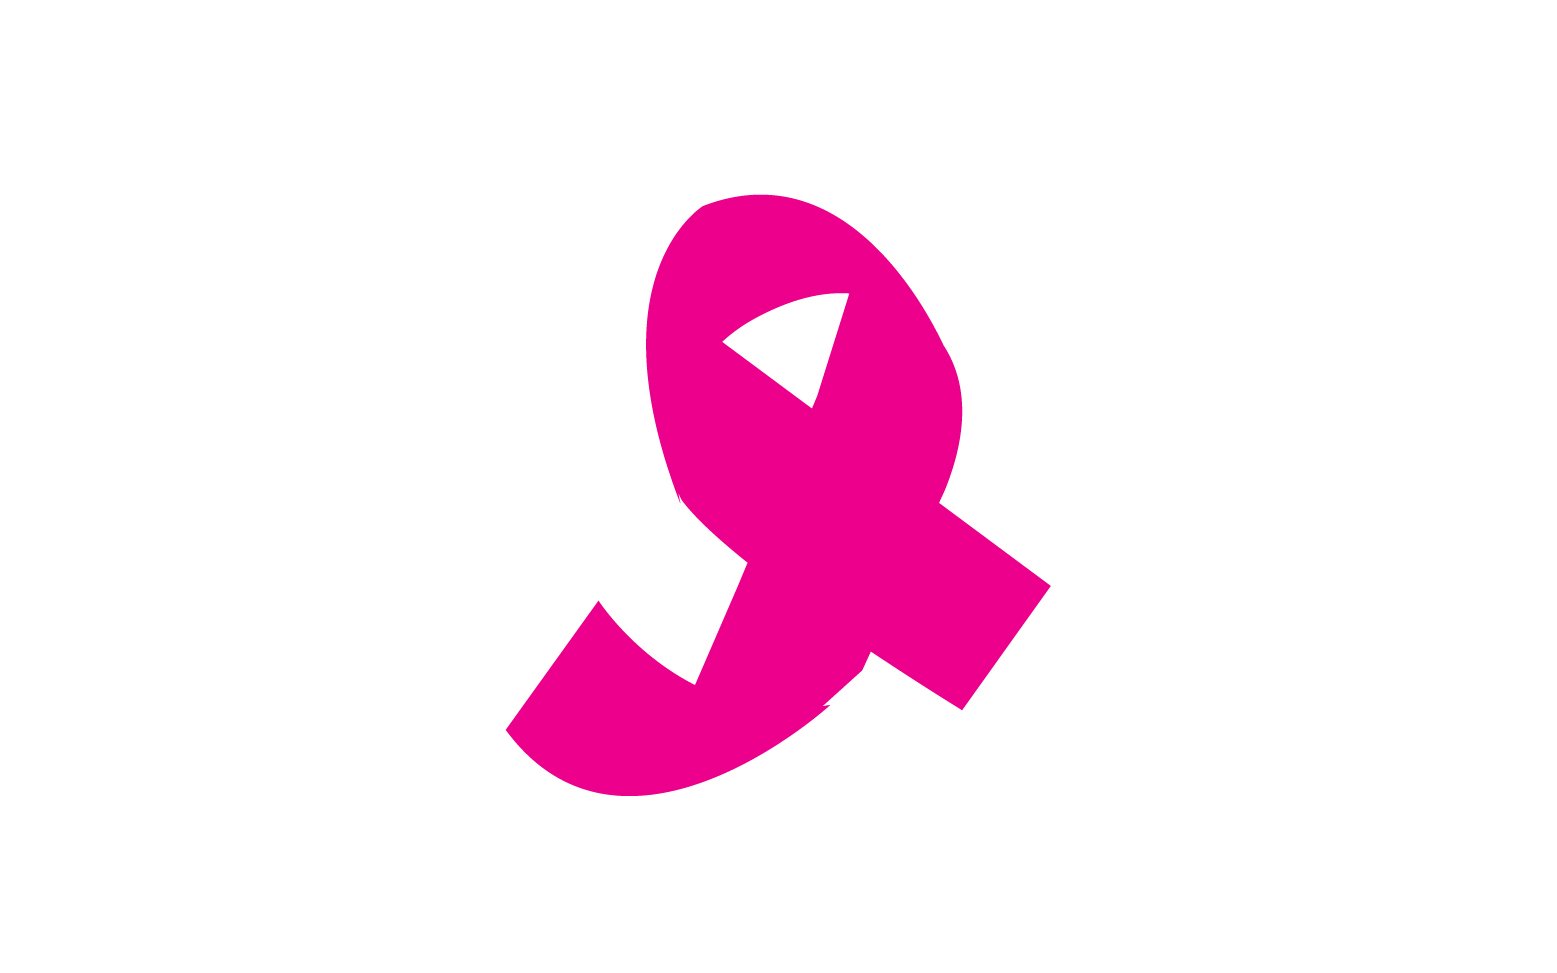 Ribbon pink icon logo element version v48